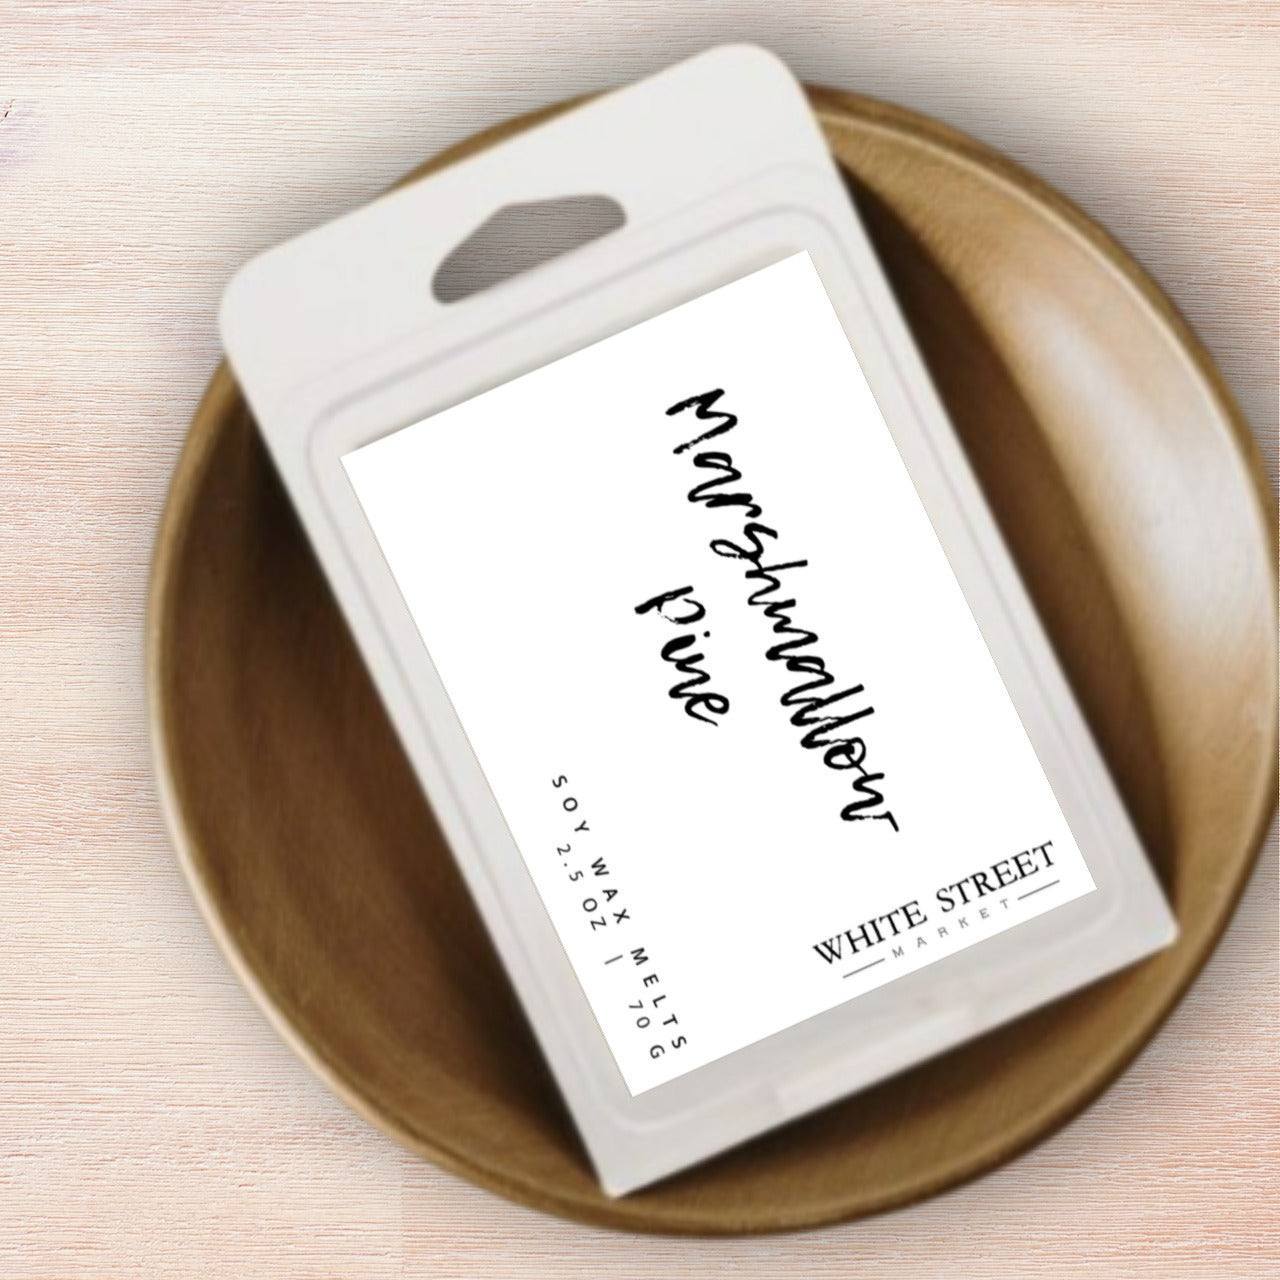 Marshmallow Pine Wax Melts – White Street Market